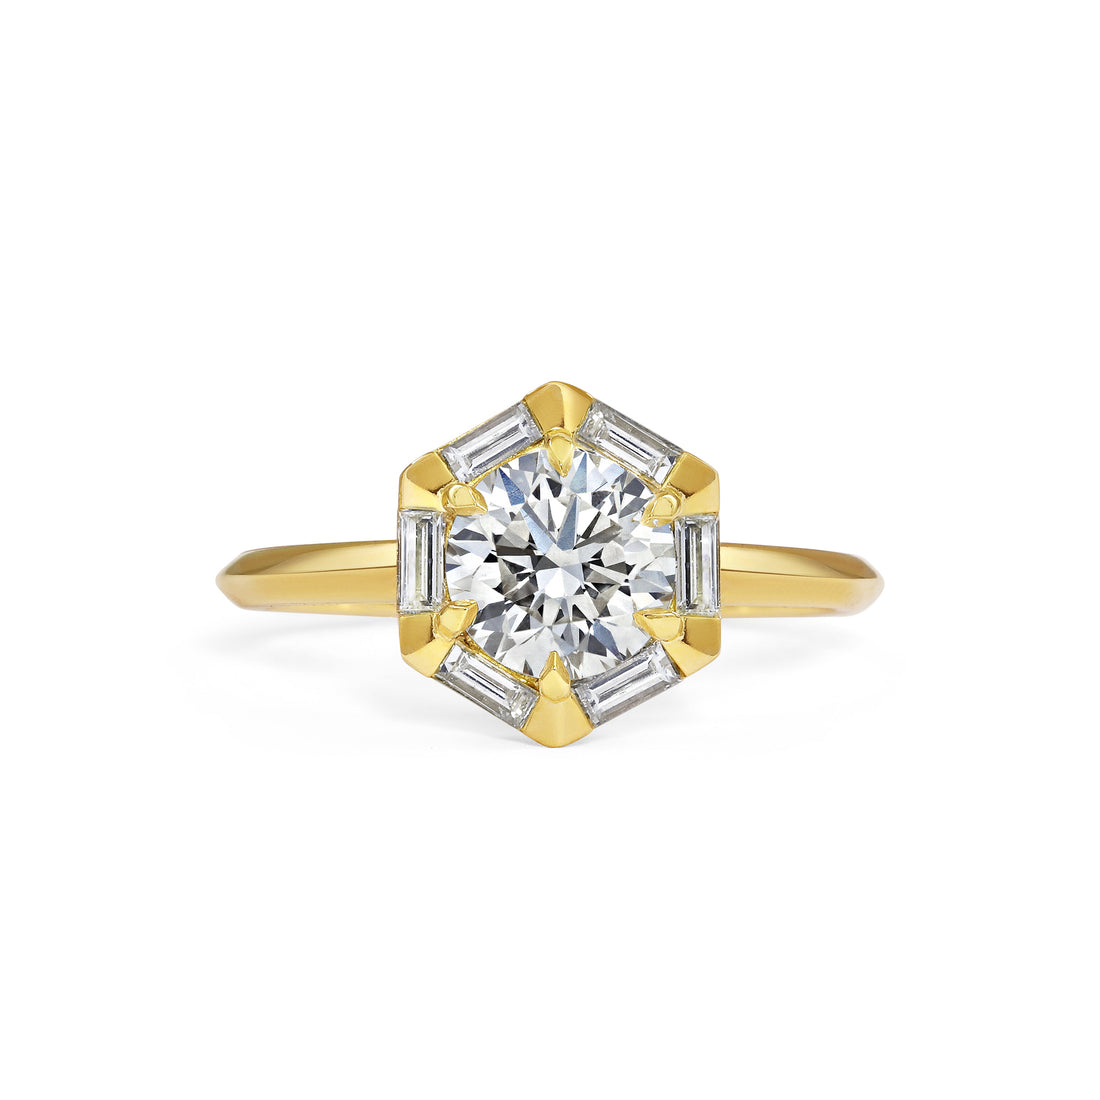  Antila Hexagonal Diamond Ring by Rachel Boston | The Cut London